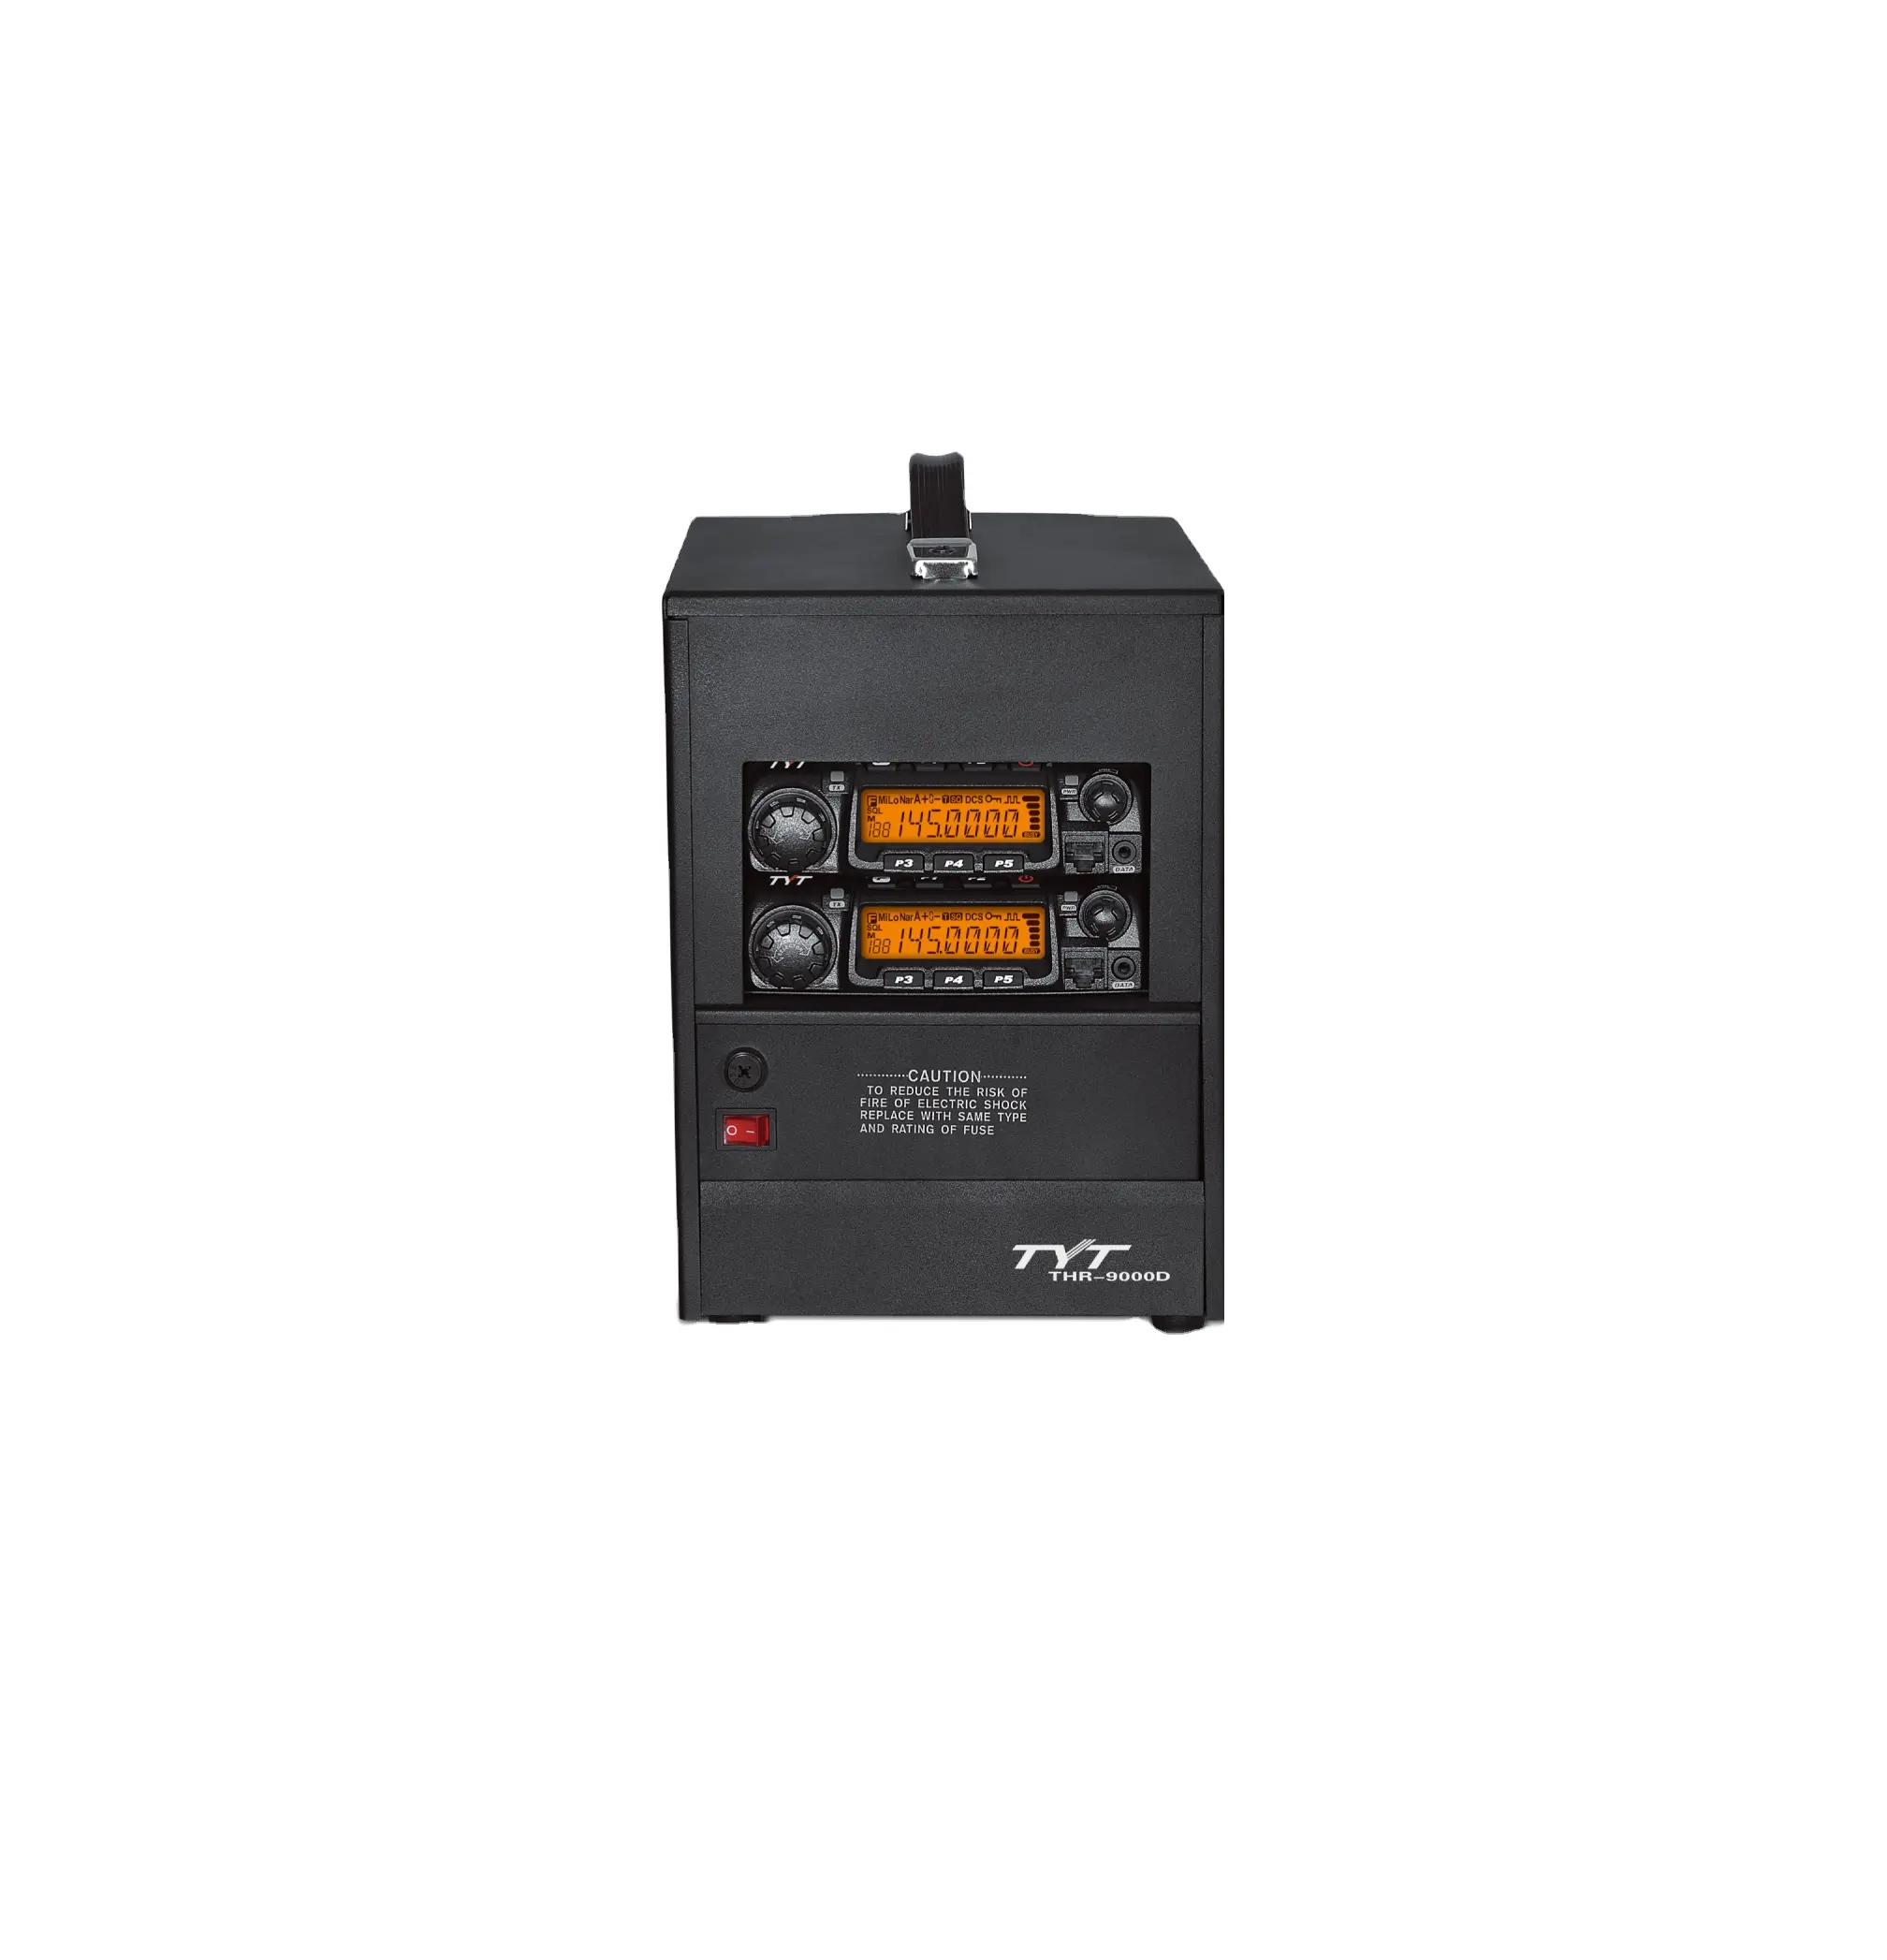 Ham radio amplifier THR-9000 Mobile, Repeater VHF/UHF kompak dan ringan hf amplifier radio ham